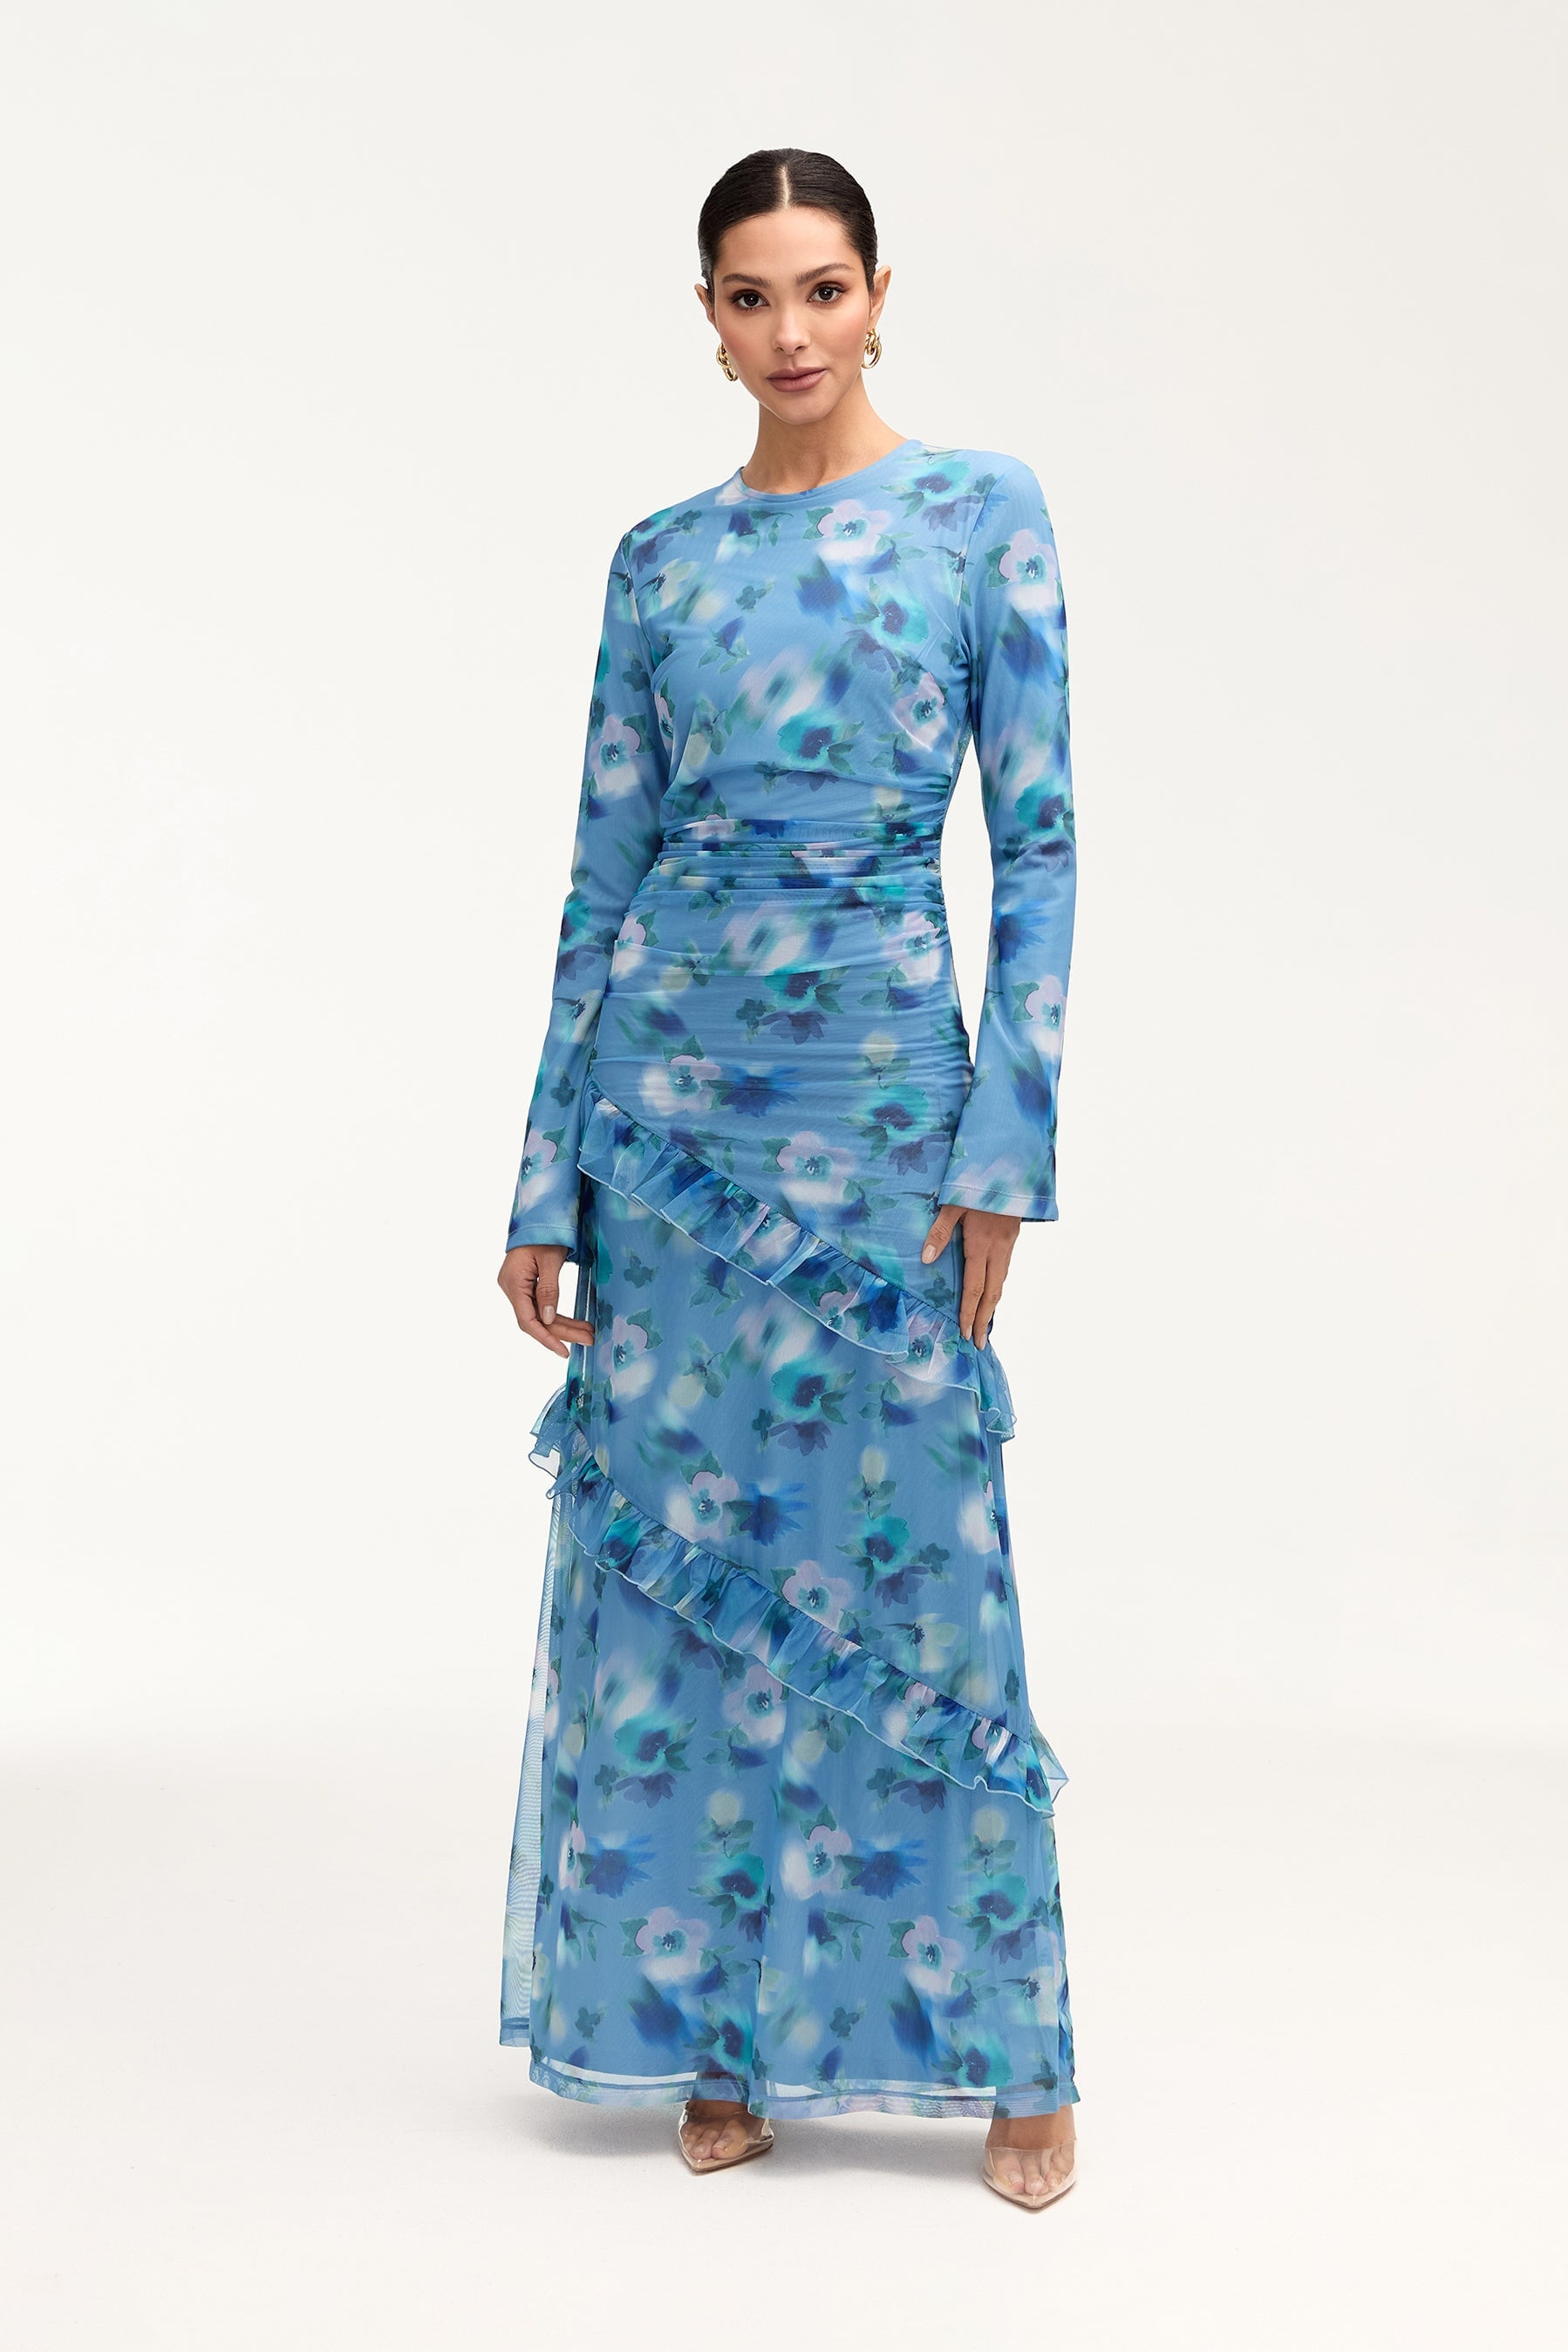 Sabrina Waterfall Mesh Maxi Dress - Floral Clothing epschoolboard 